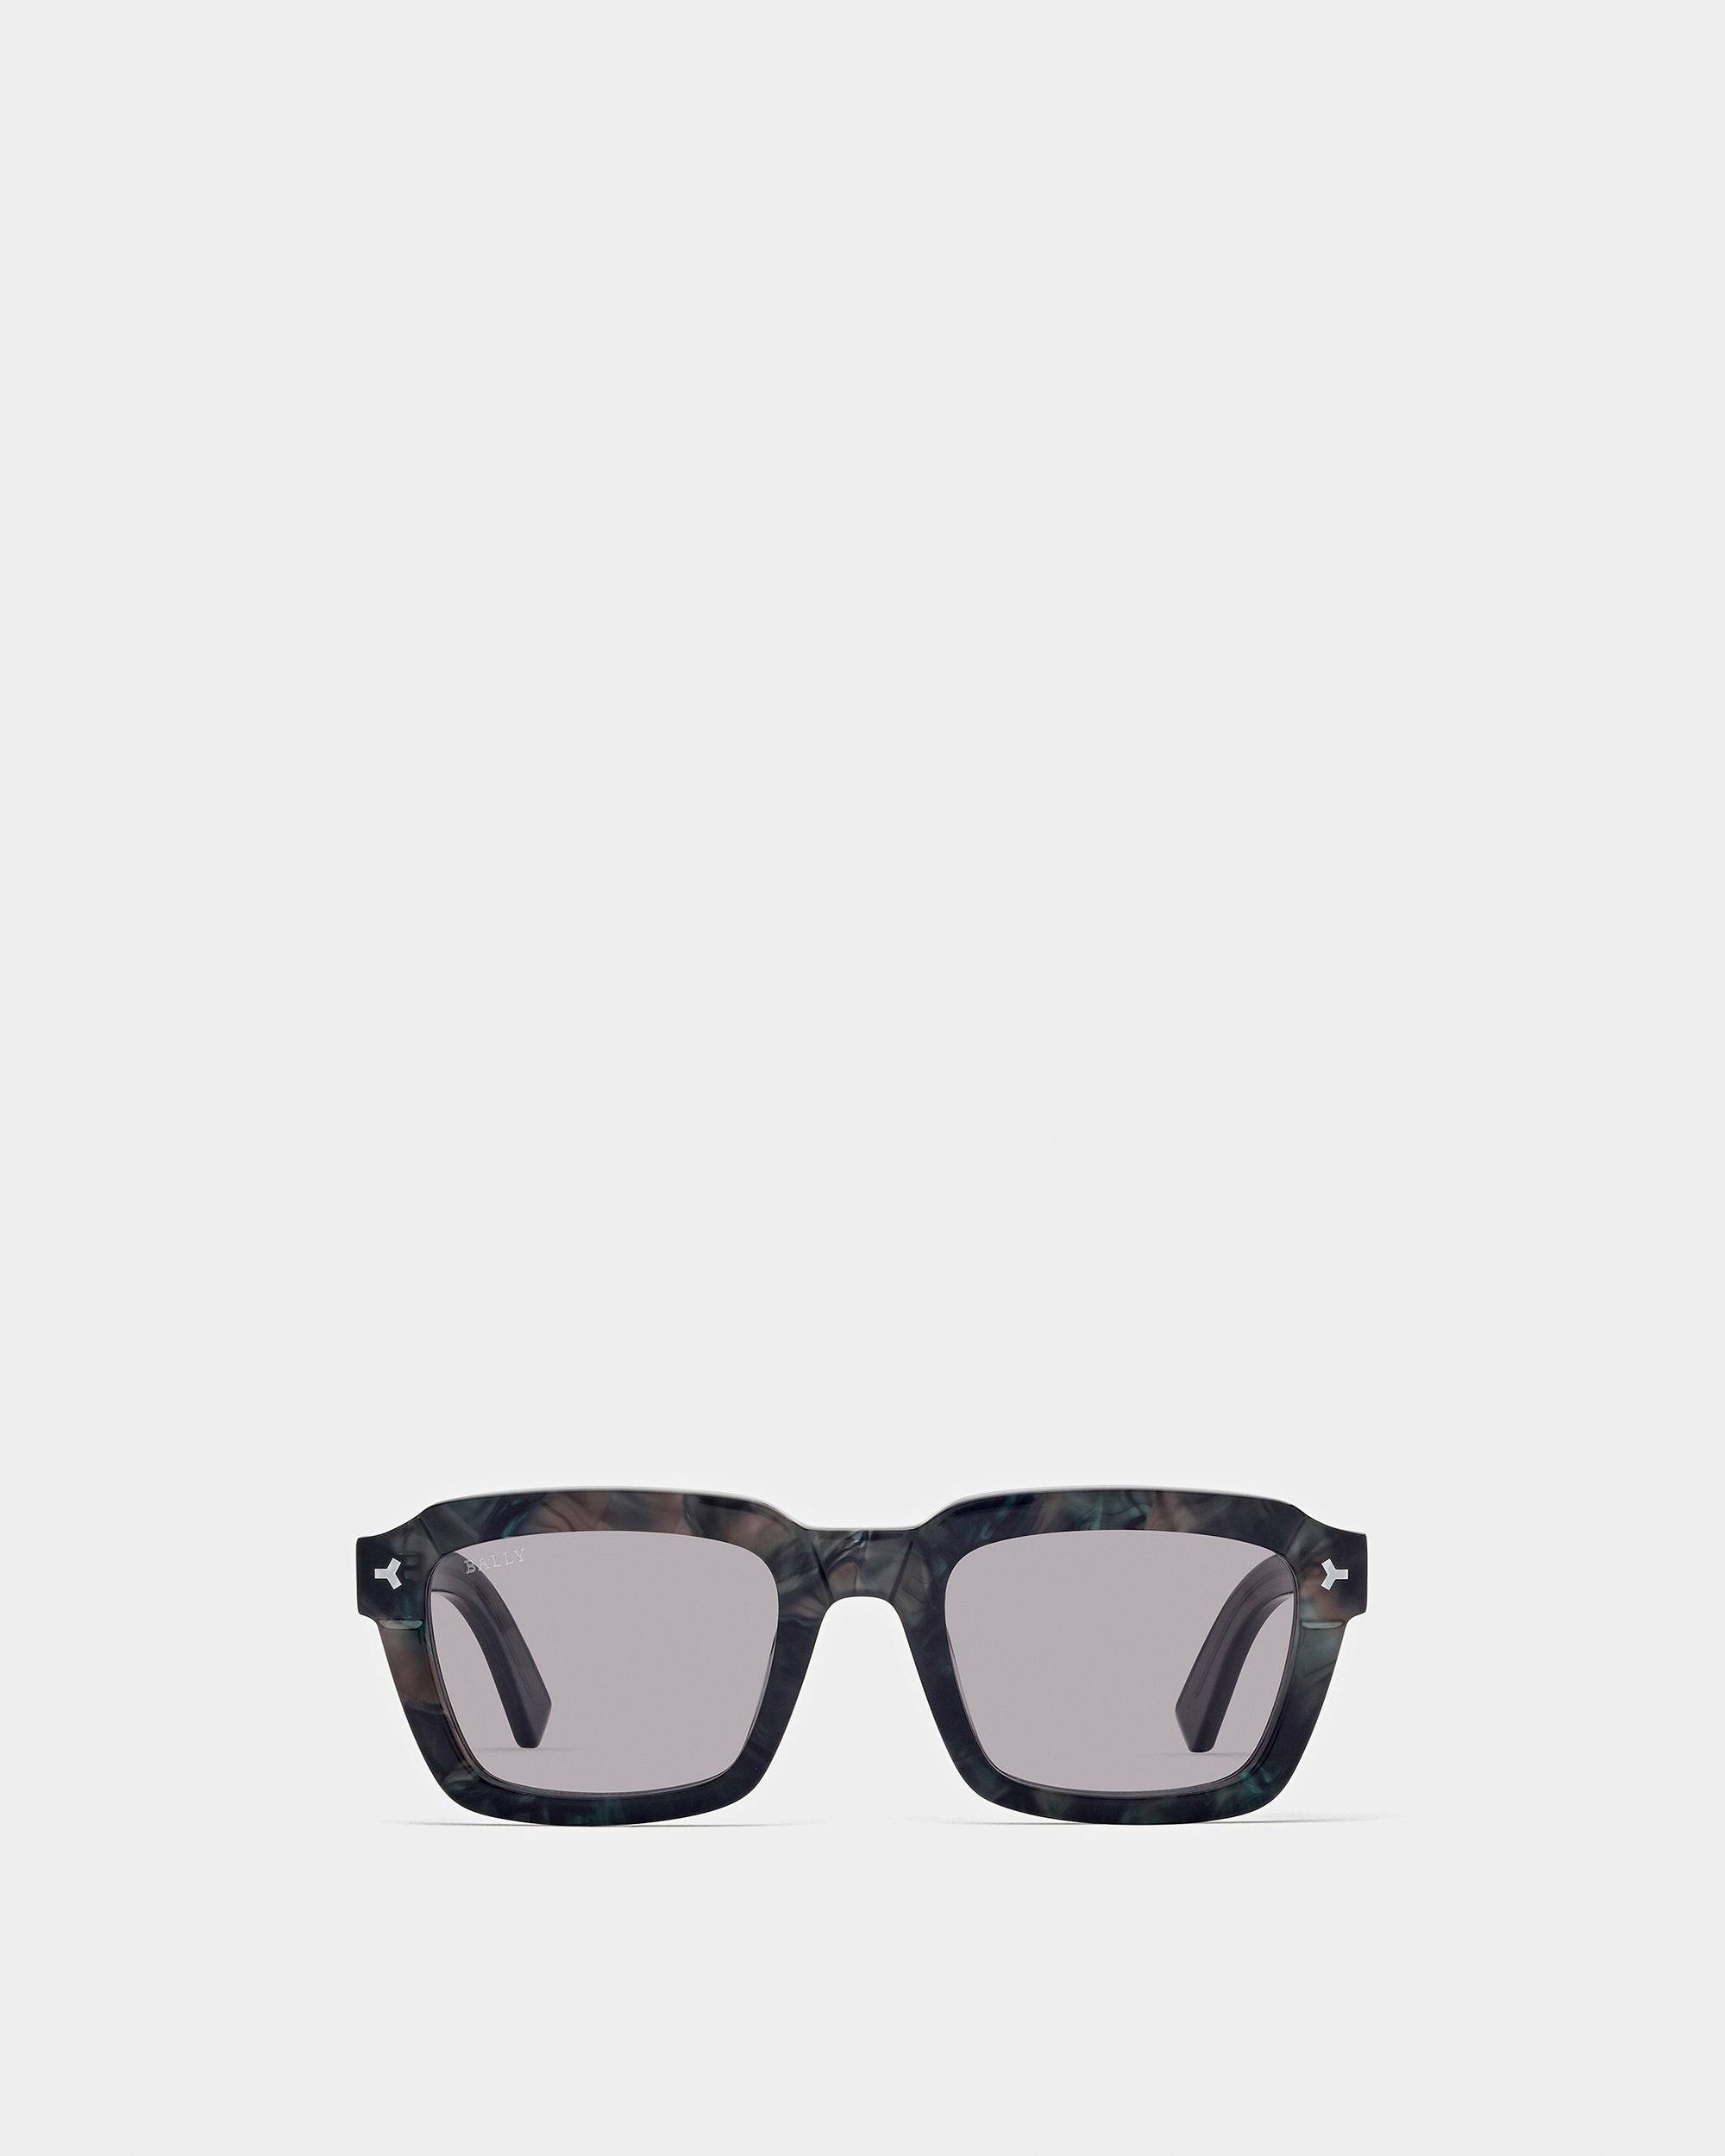 Nicholas Rectangular Full Rim Sunglasses In Black And Gray - Men's - Bally